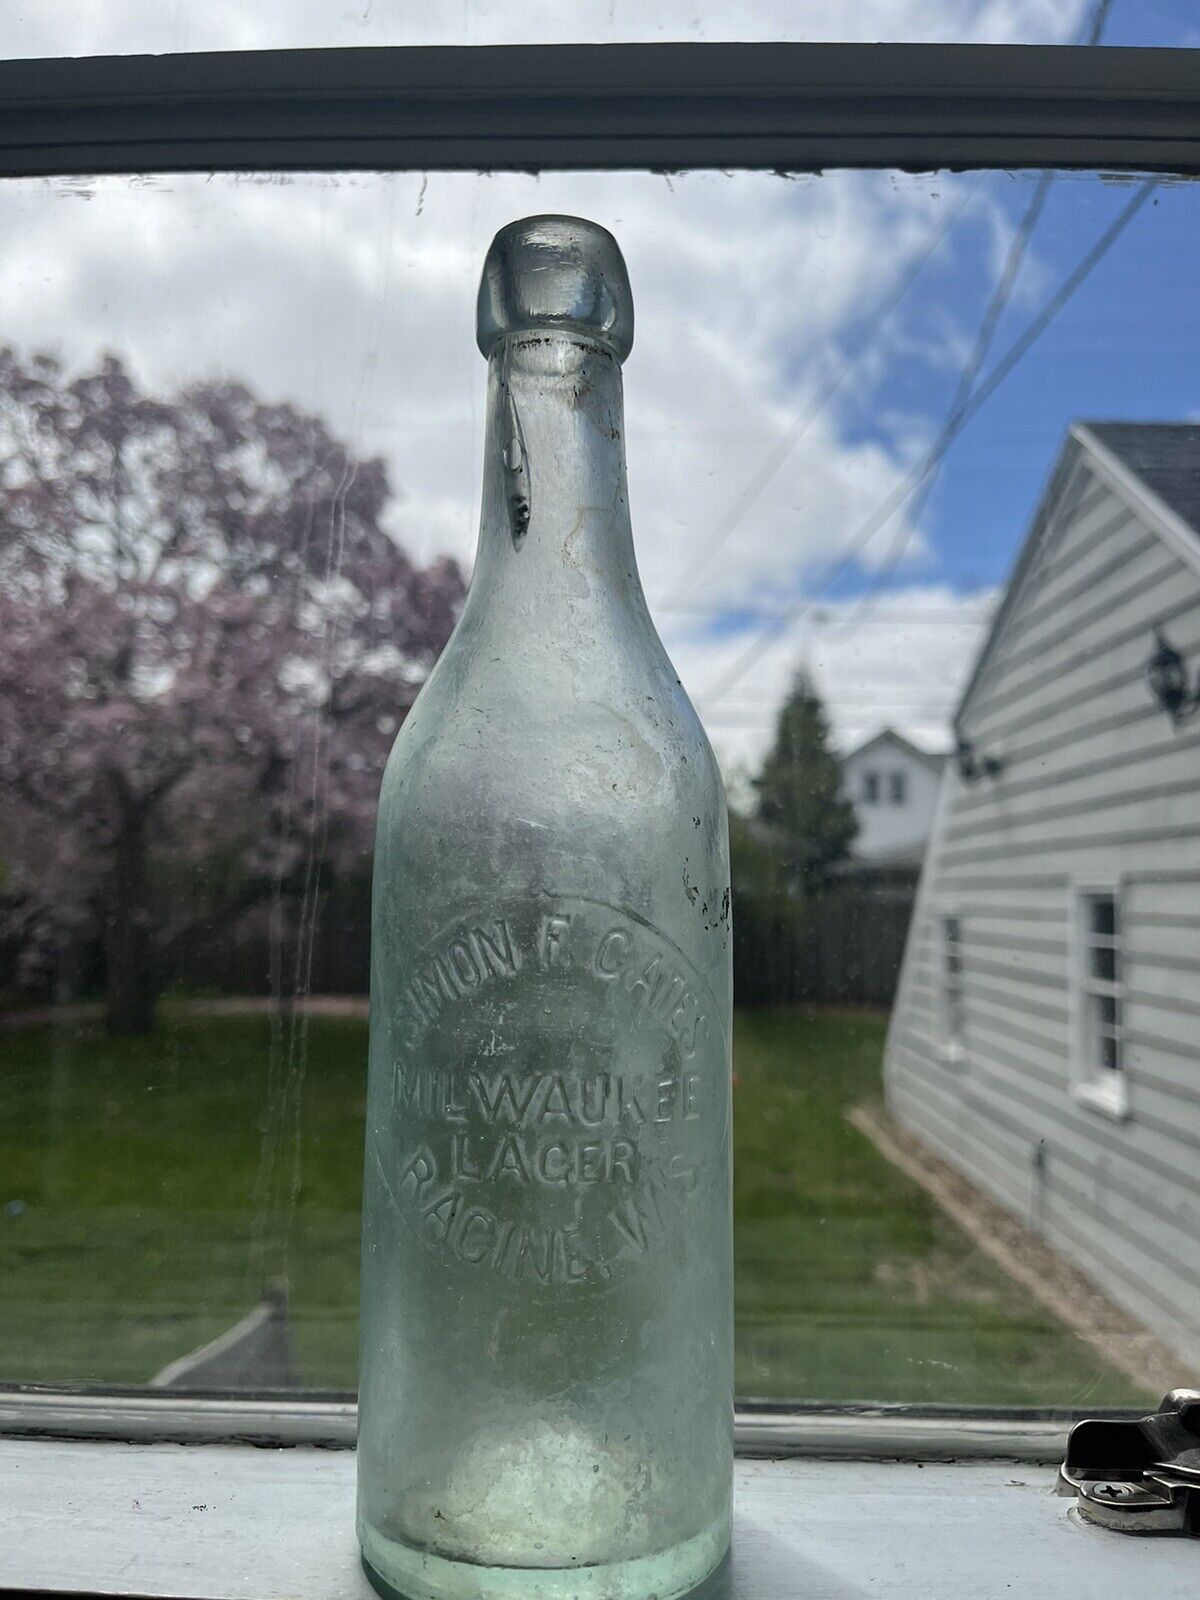 Vintage Rare Simon F. Gates Milwaukee Lager Blob Beer Bottle Racine Wi Wisconsin